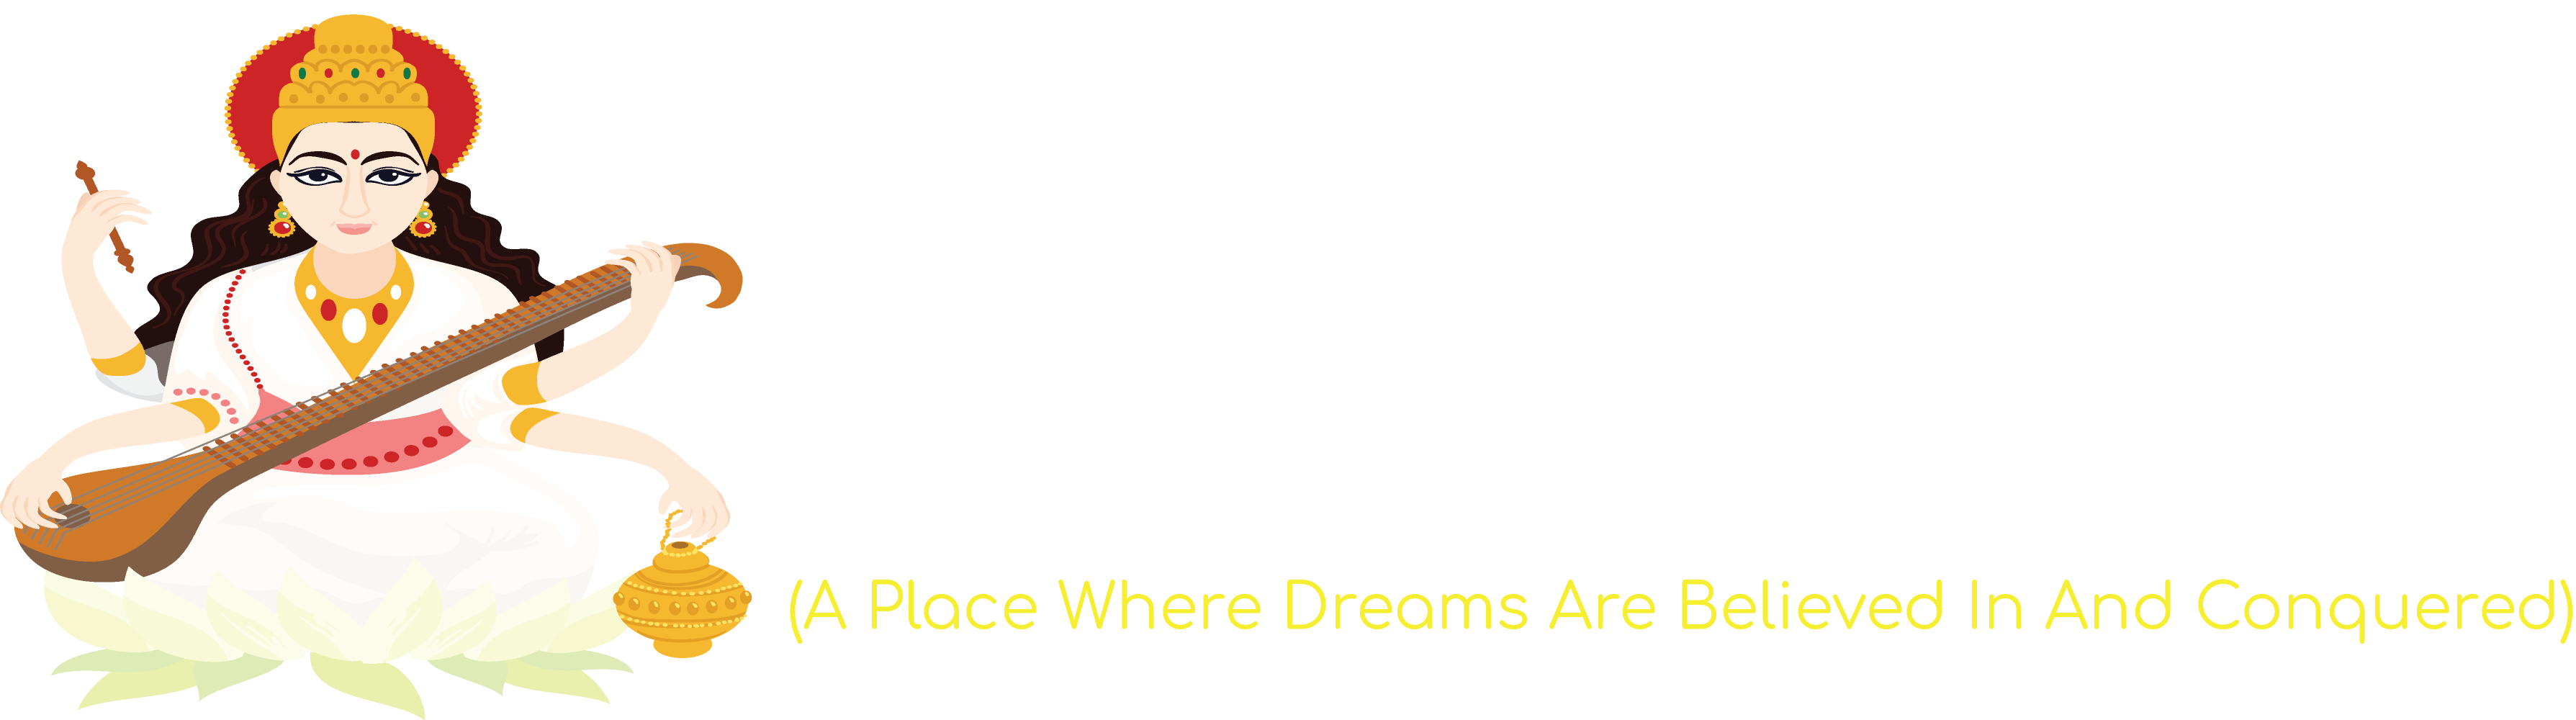 Adarsh Sr. Sec. School|Colleges|Education